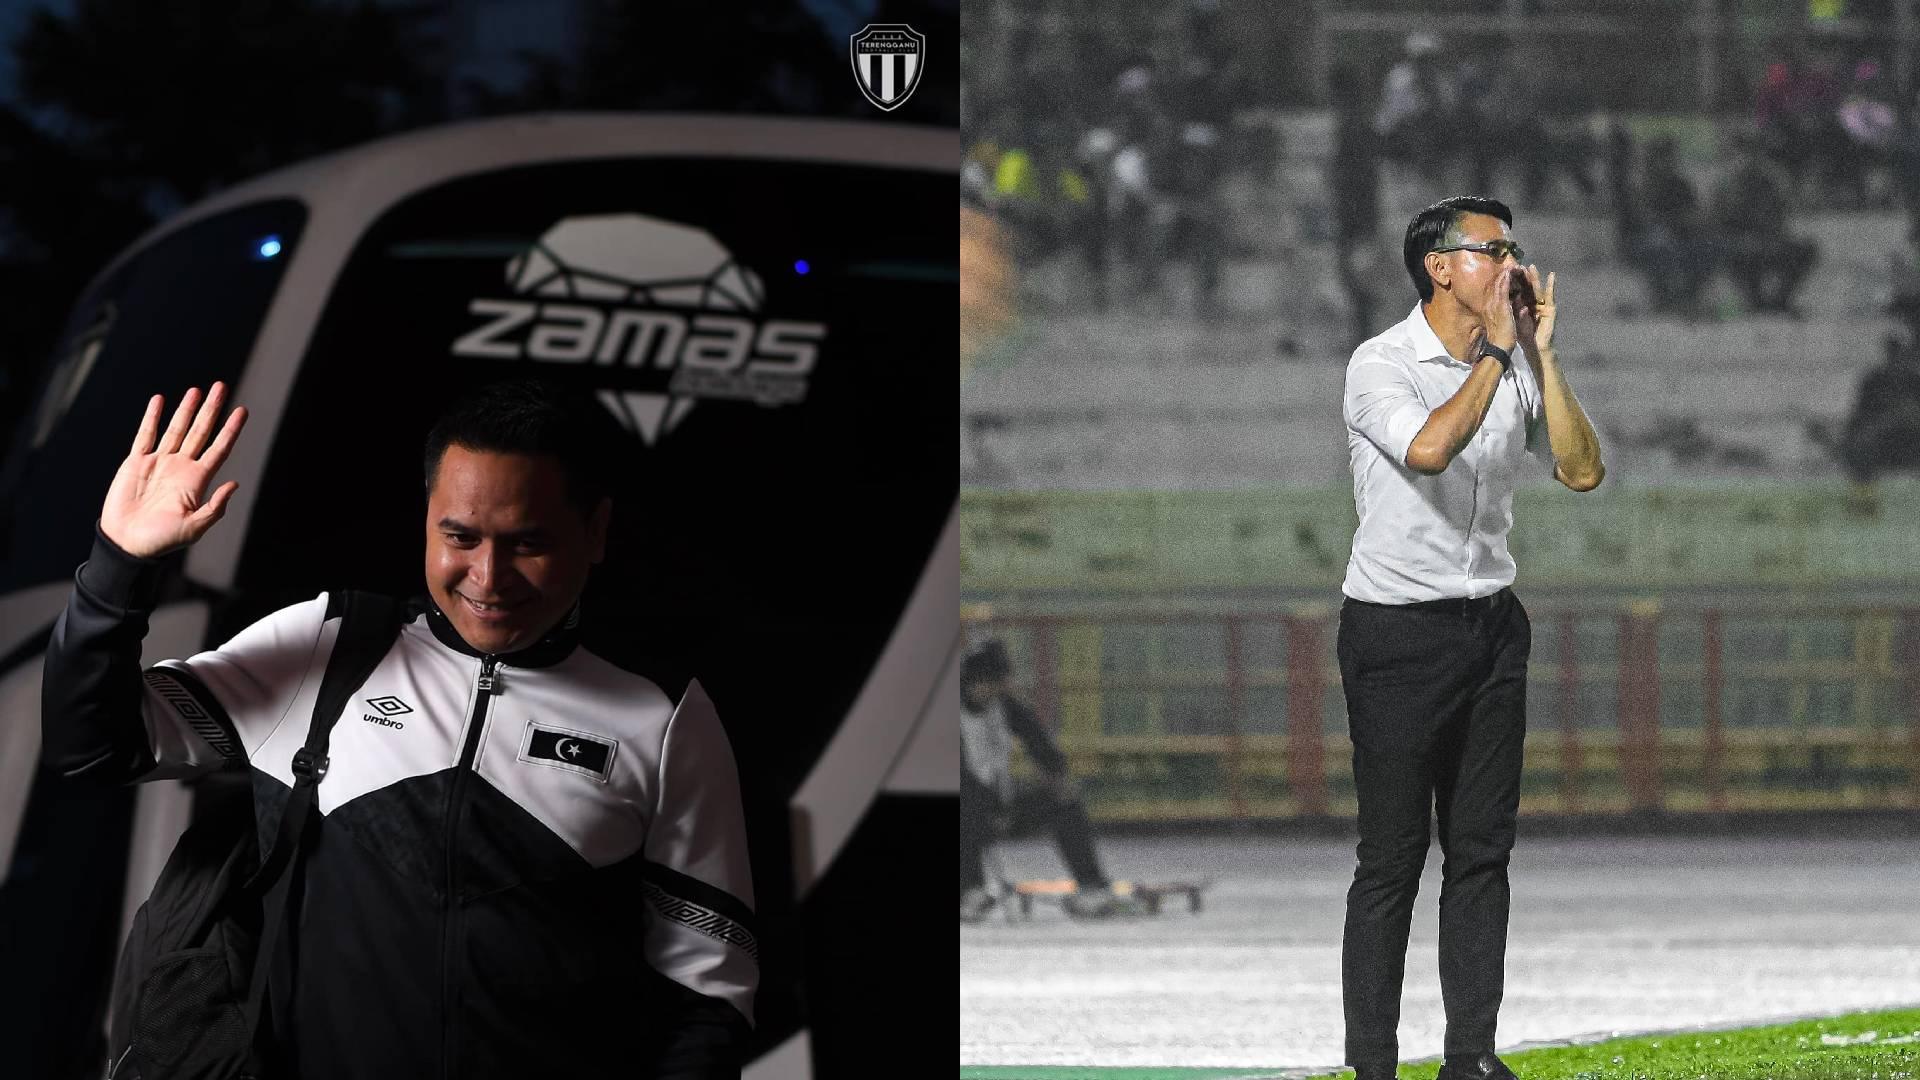 Nafuzi Tan Cheng Hoe Nafuzi Gusar Lihat Rekod Cemerlang Tan Cheng Hoe Di Selangor